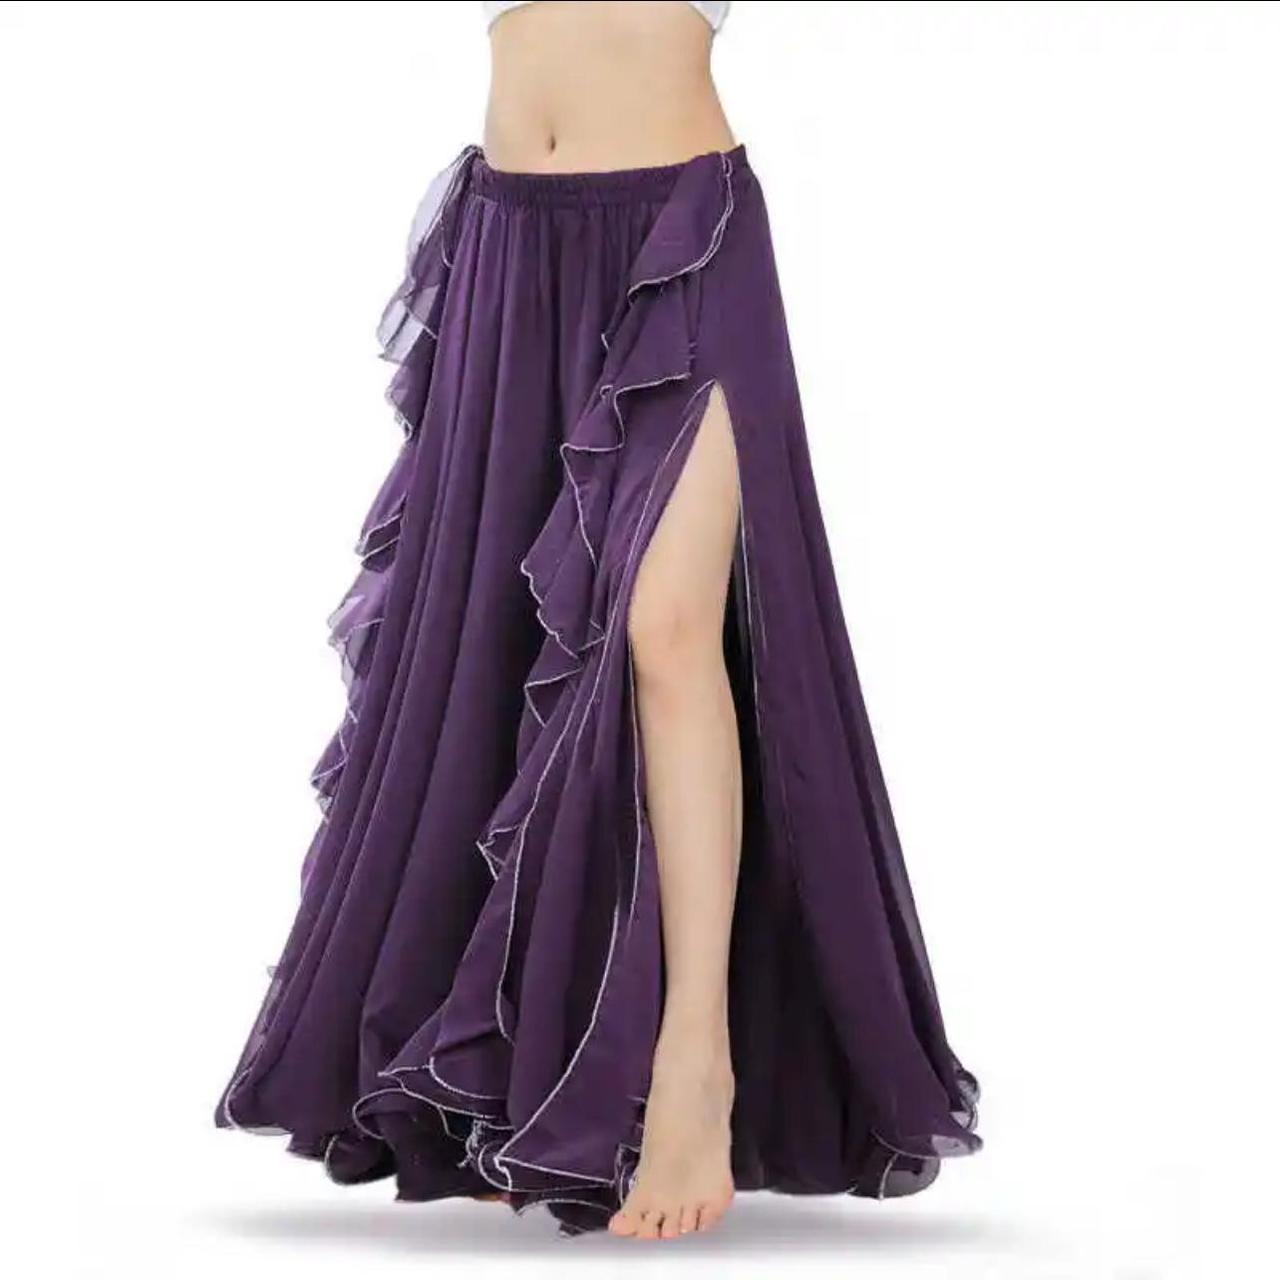 Esmerelda cosplay belly dancing skirt ~ if... - Depop